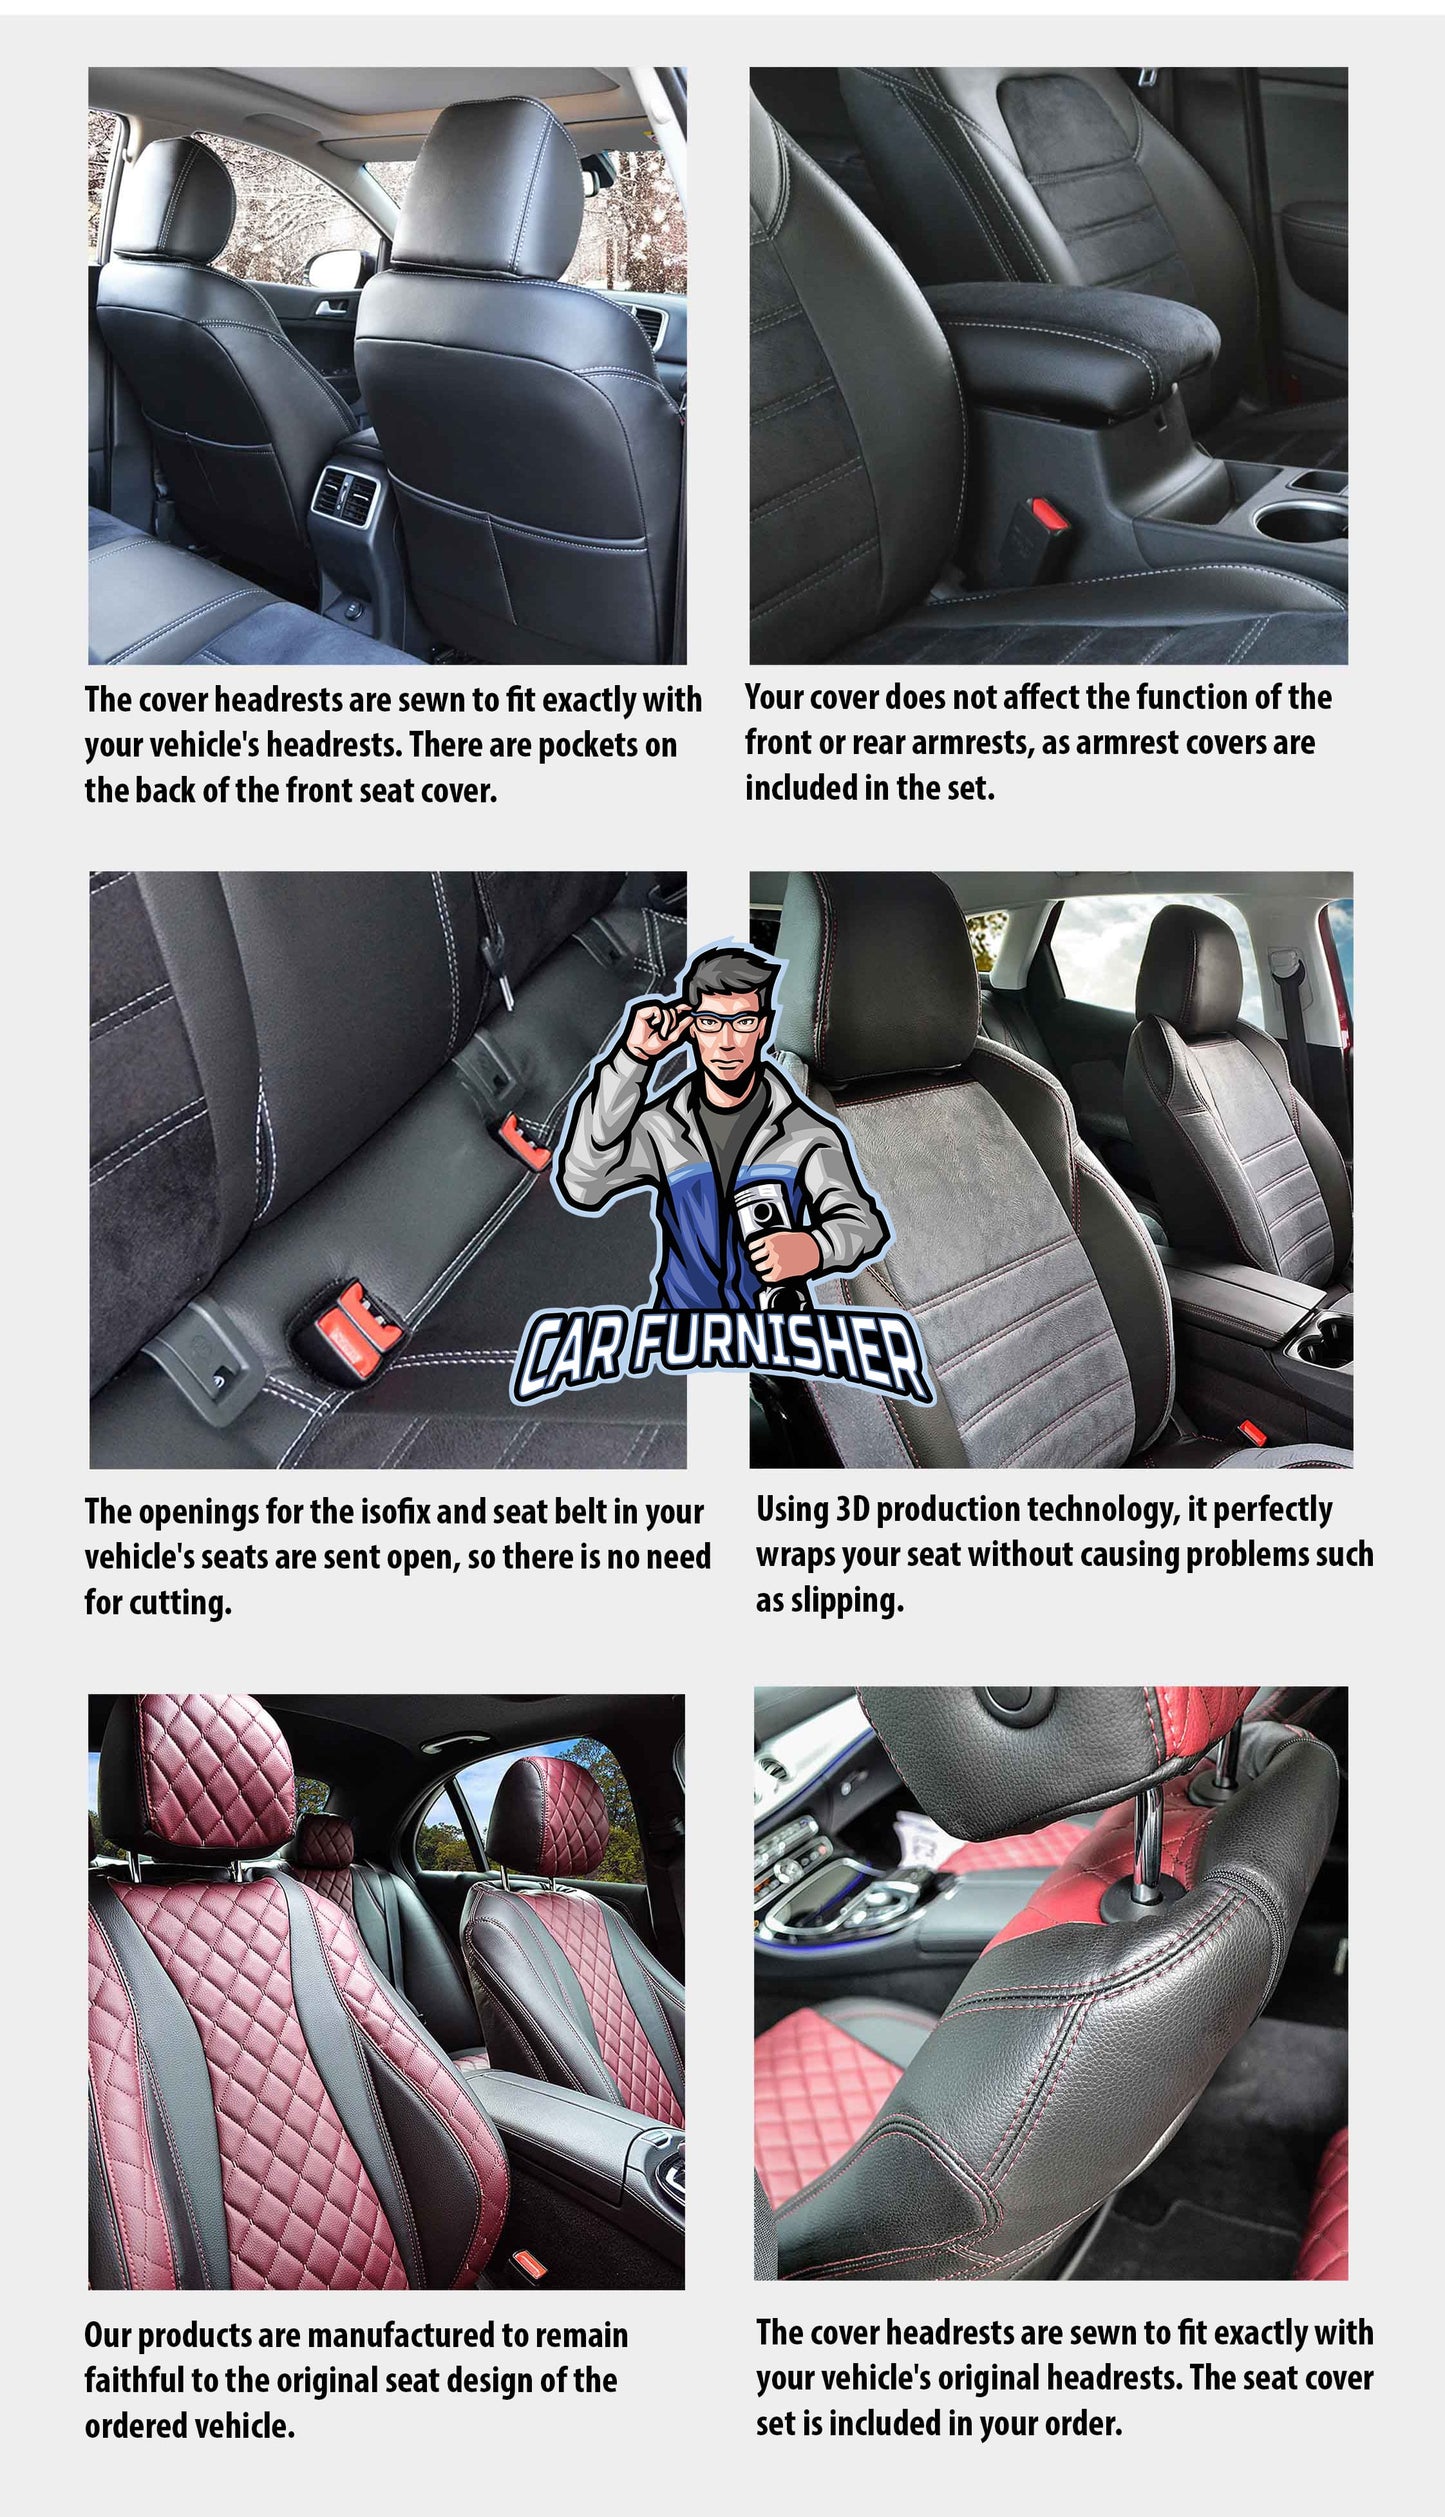 Suzuki Grand Vitara Seat Covers London Foal Feather Design Red Leather & Foal Feather